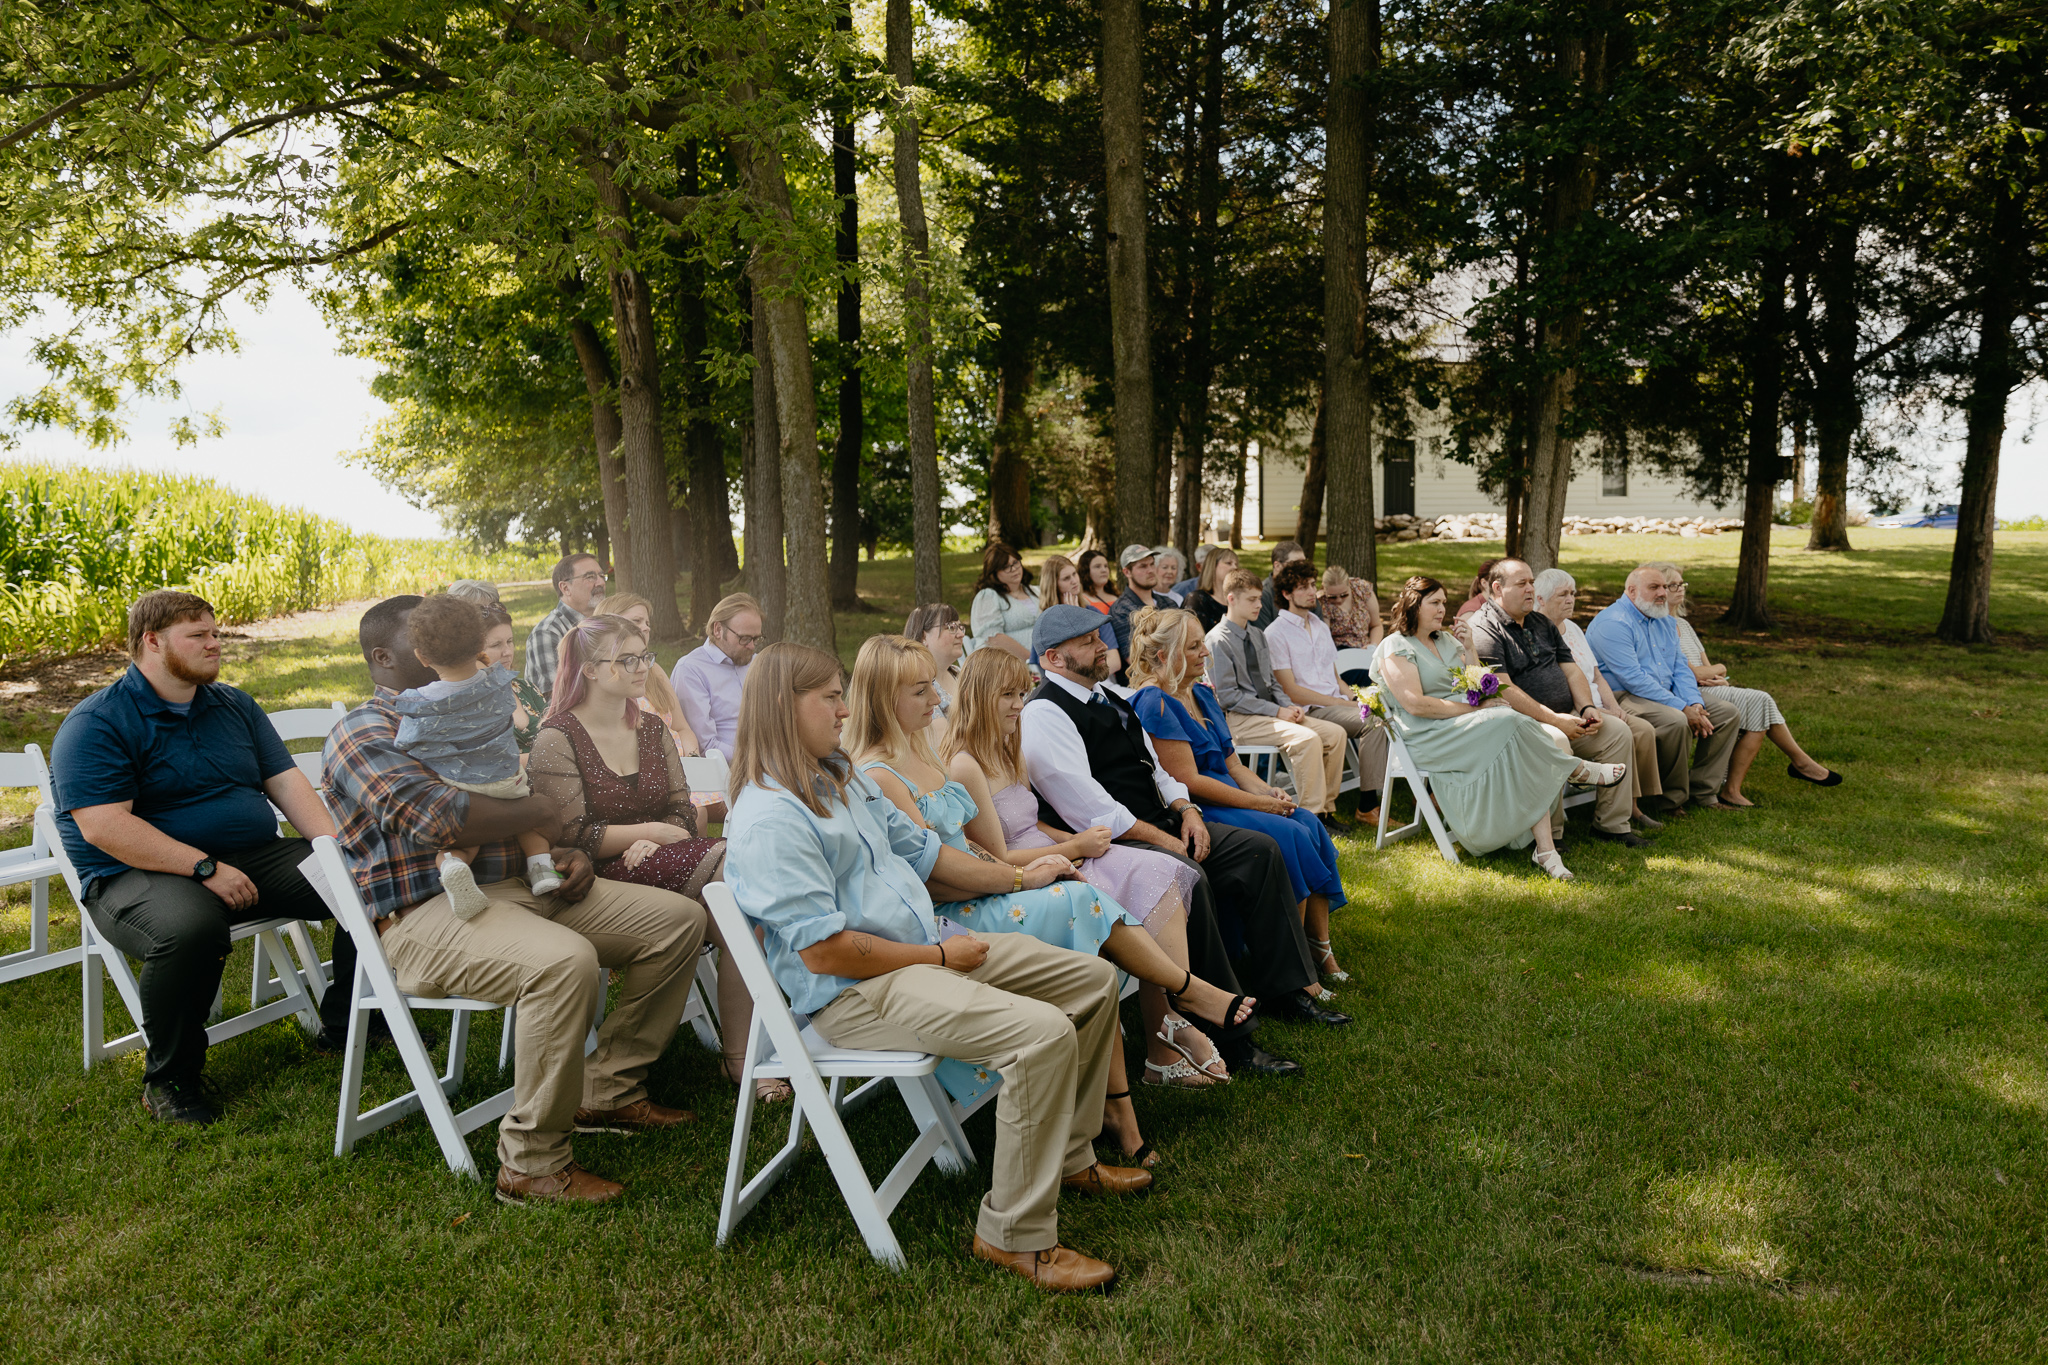 Intimate Indiana Wedding in Summer // Outdoor Ceremony